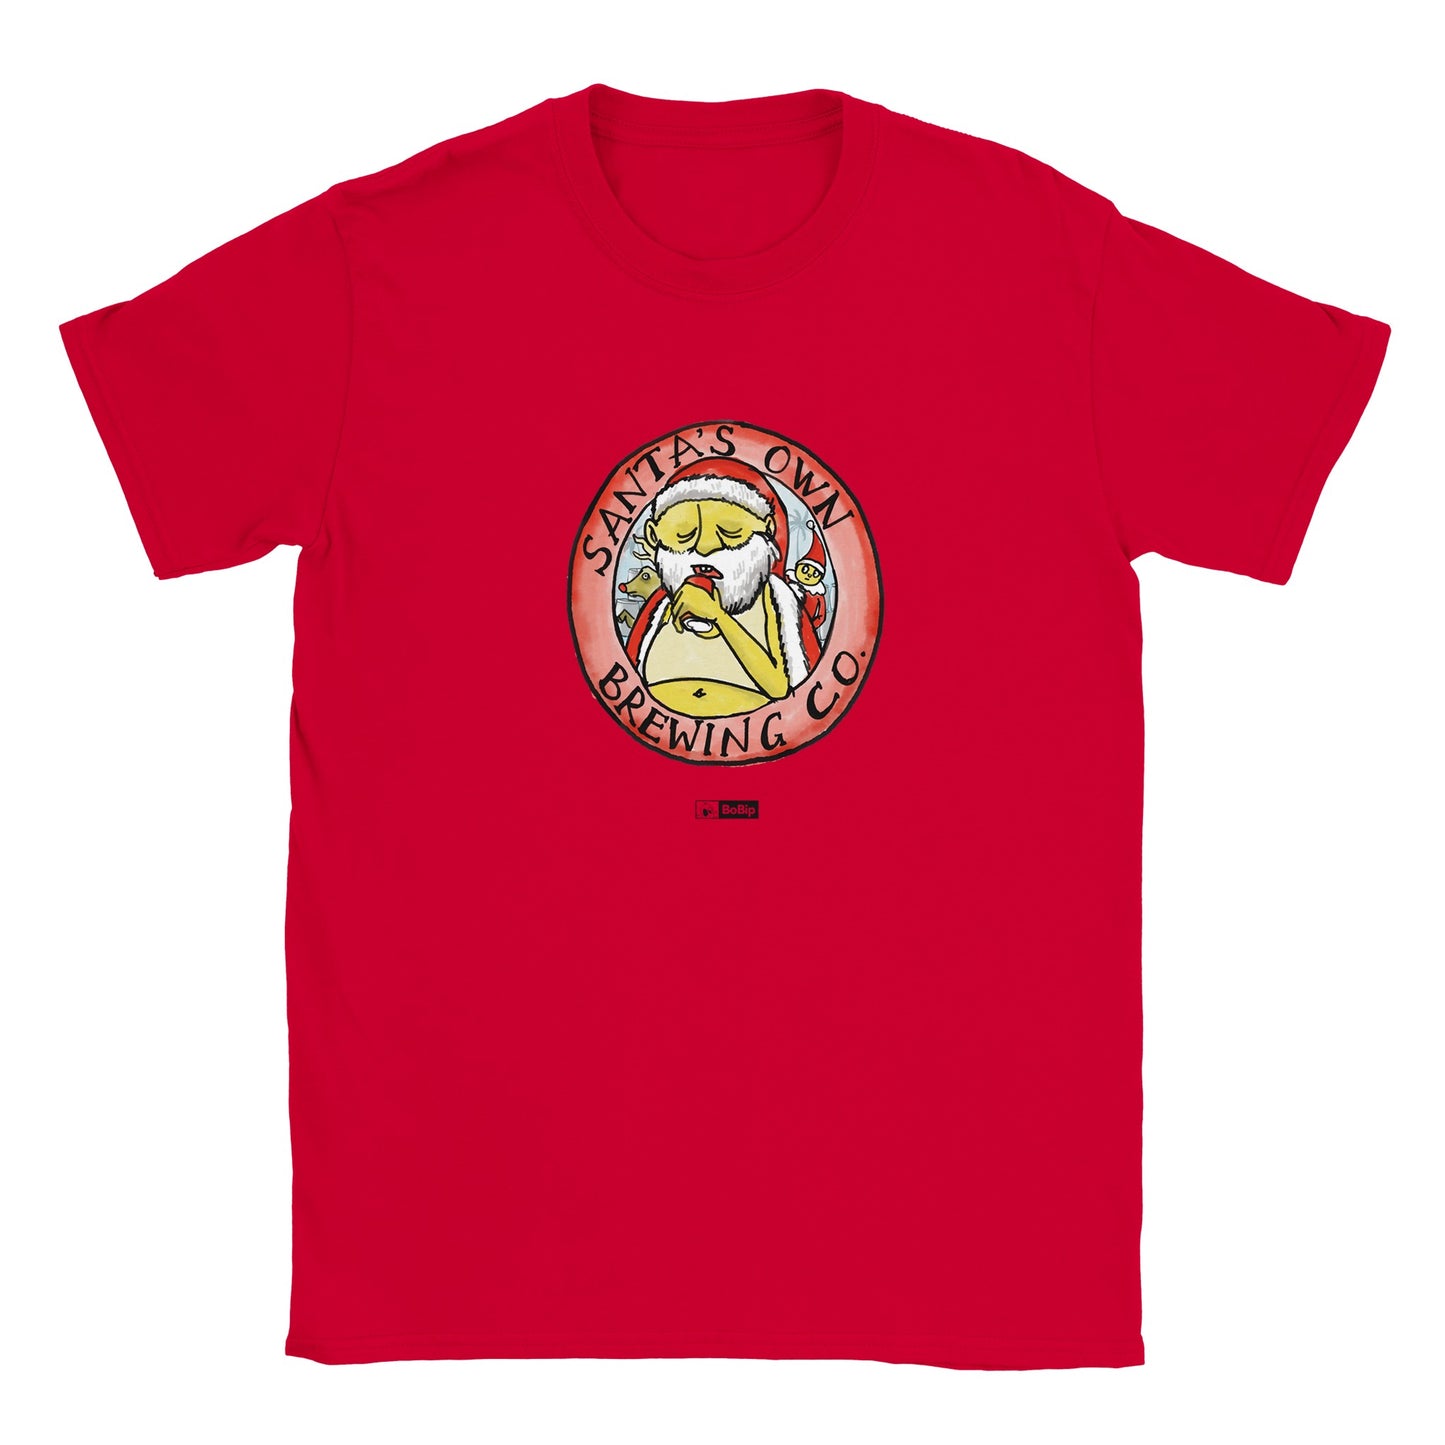 Santa's Own Brewing Co. - Unisex Crewneck T-shirt